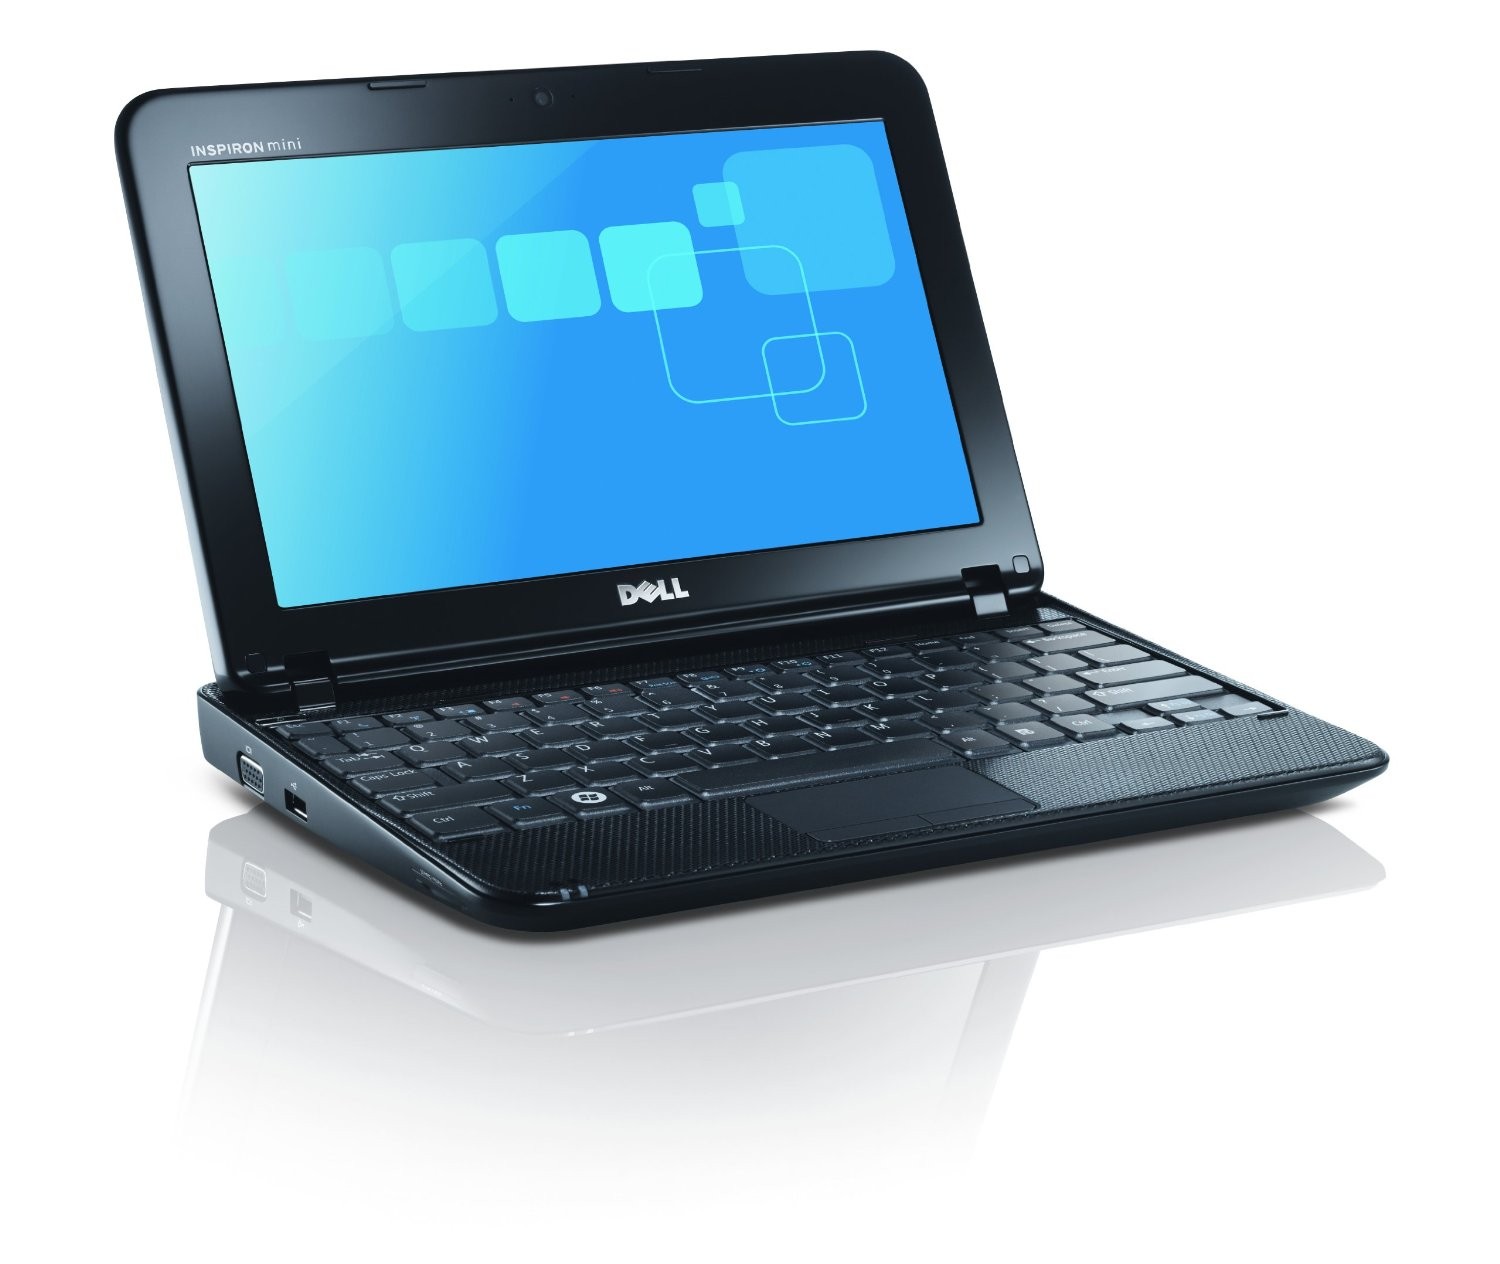 Dell inspiron windows 7 laptop